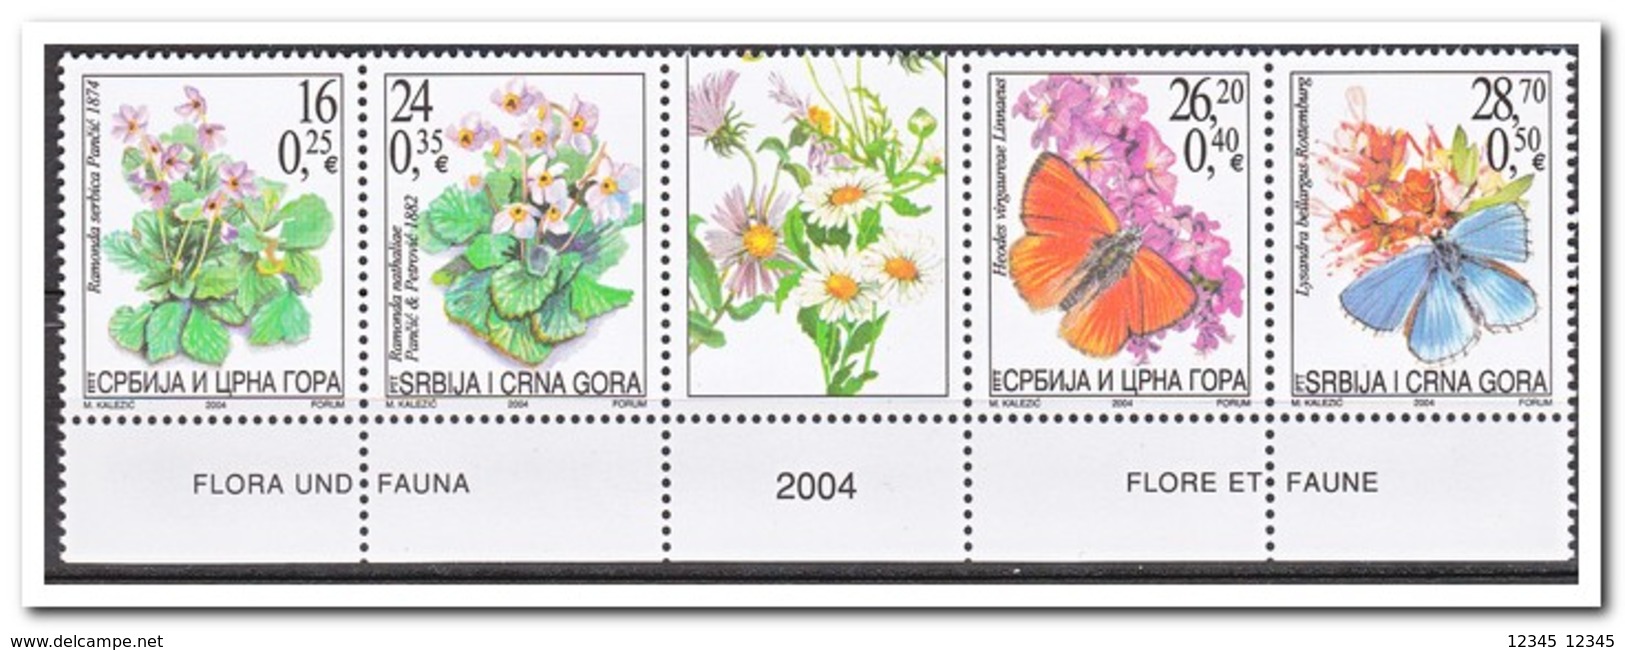 Servië 2004, Postfris MNH, Flowers, Butterflies - Servië